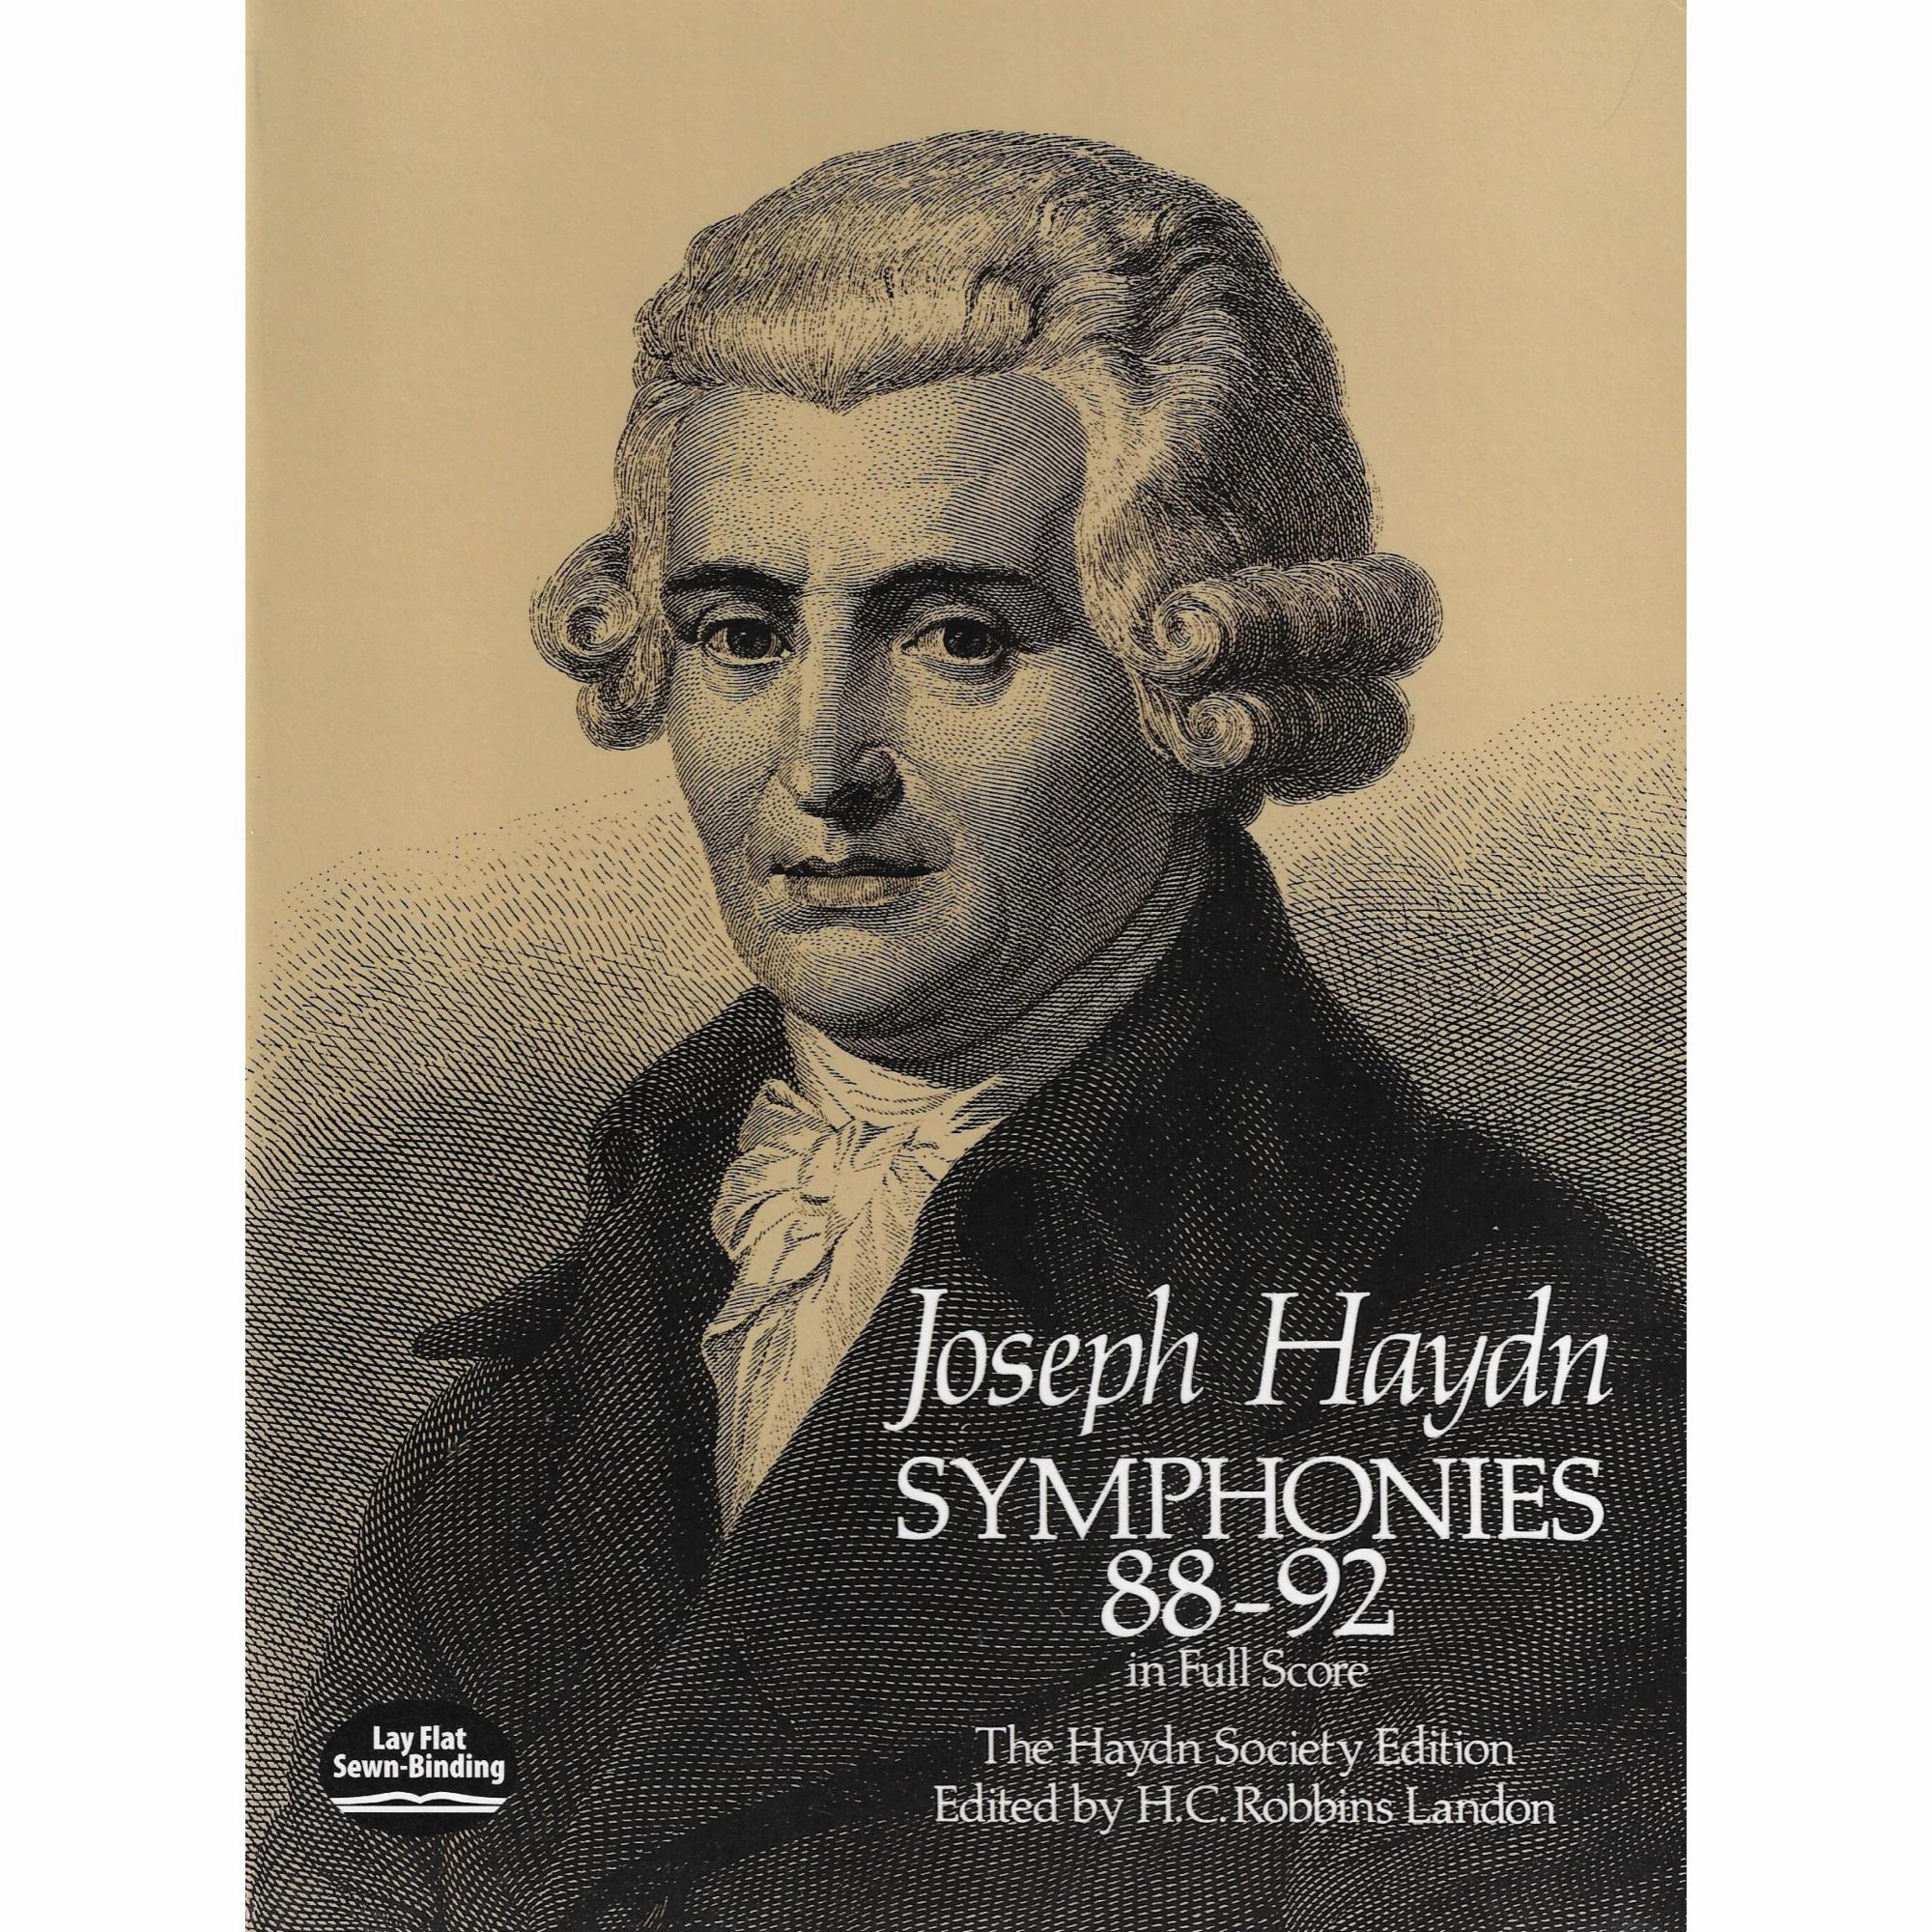 Haydn -- Symphonies 88-92 in Full Score